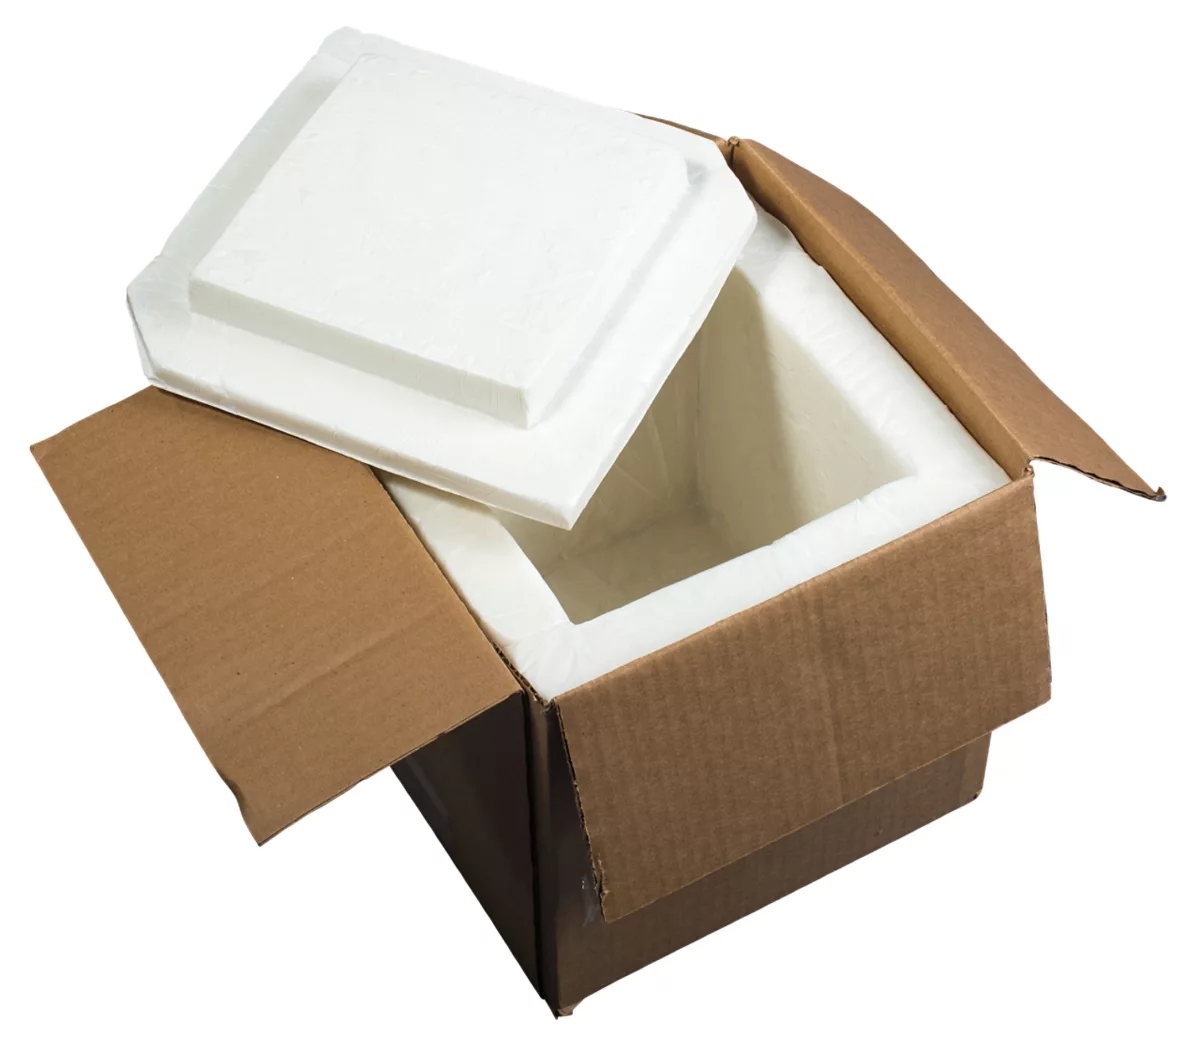 Instapak Thermal Pur in a cardboard box